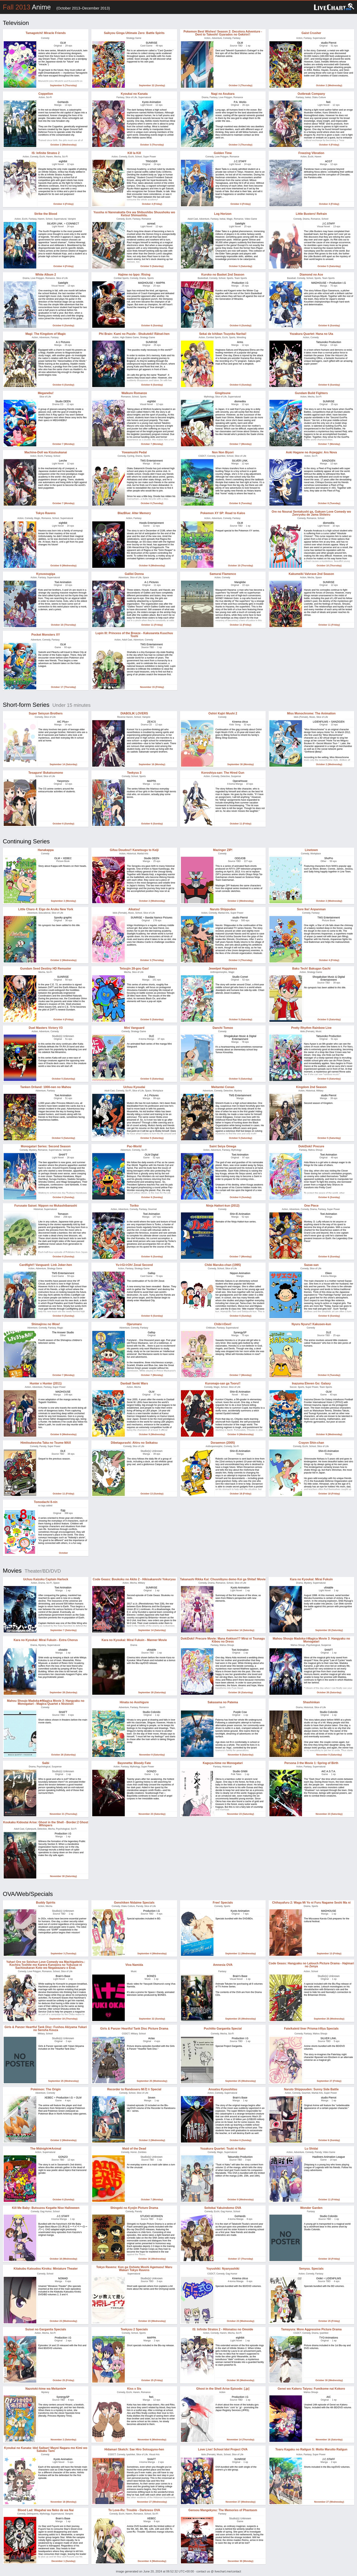 Anime 2013 Chart